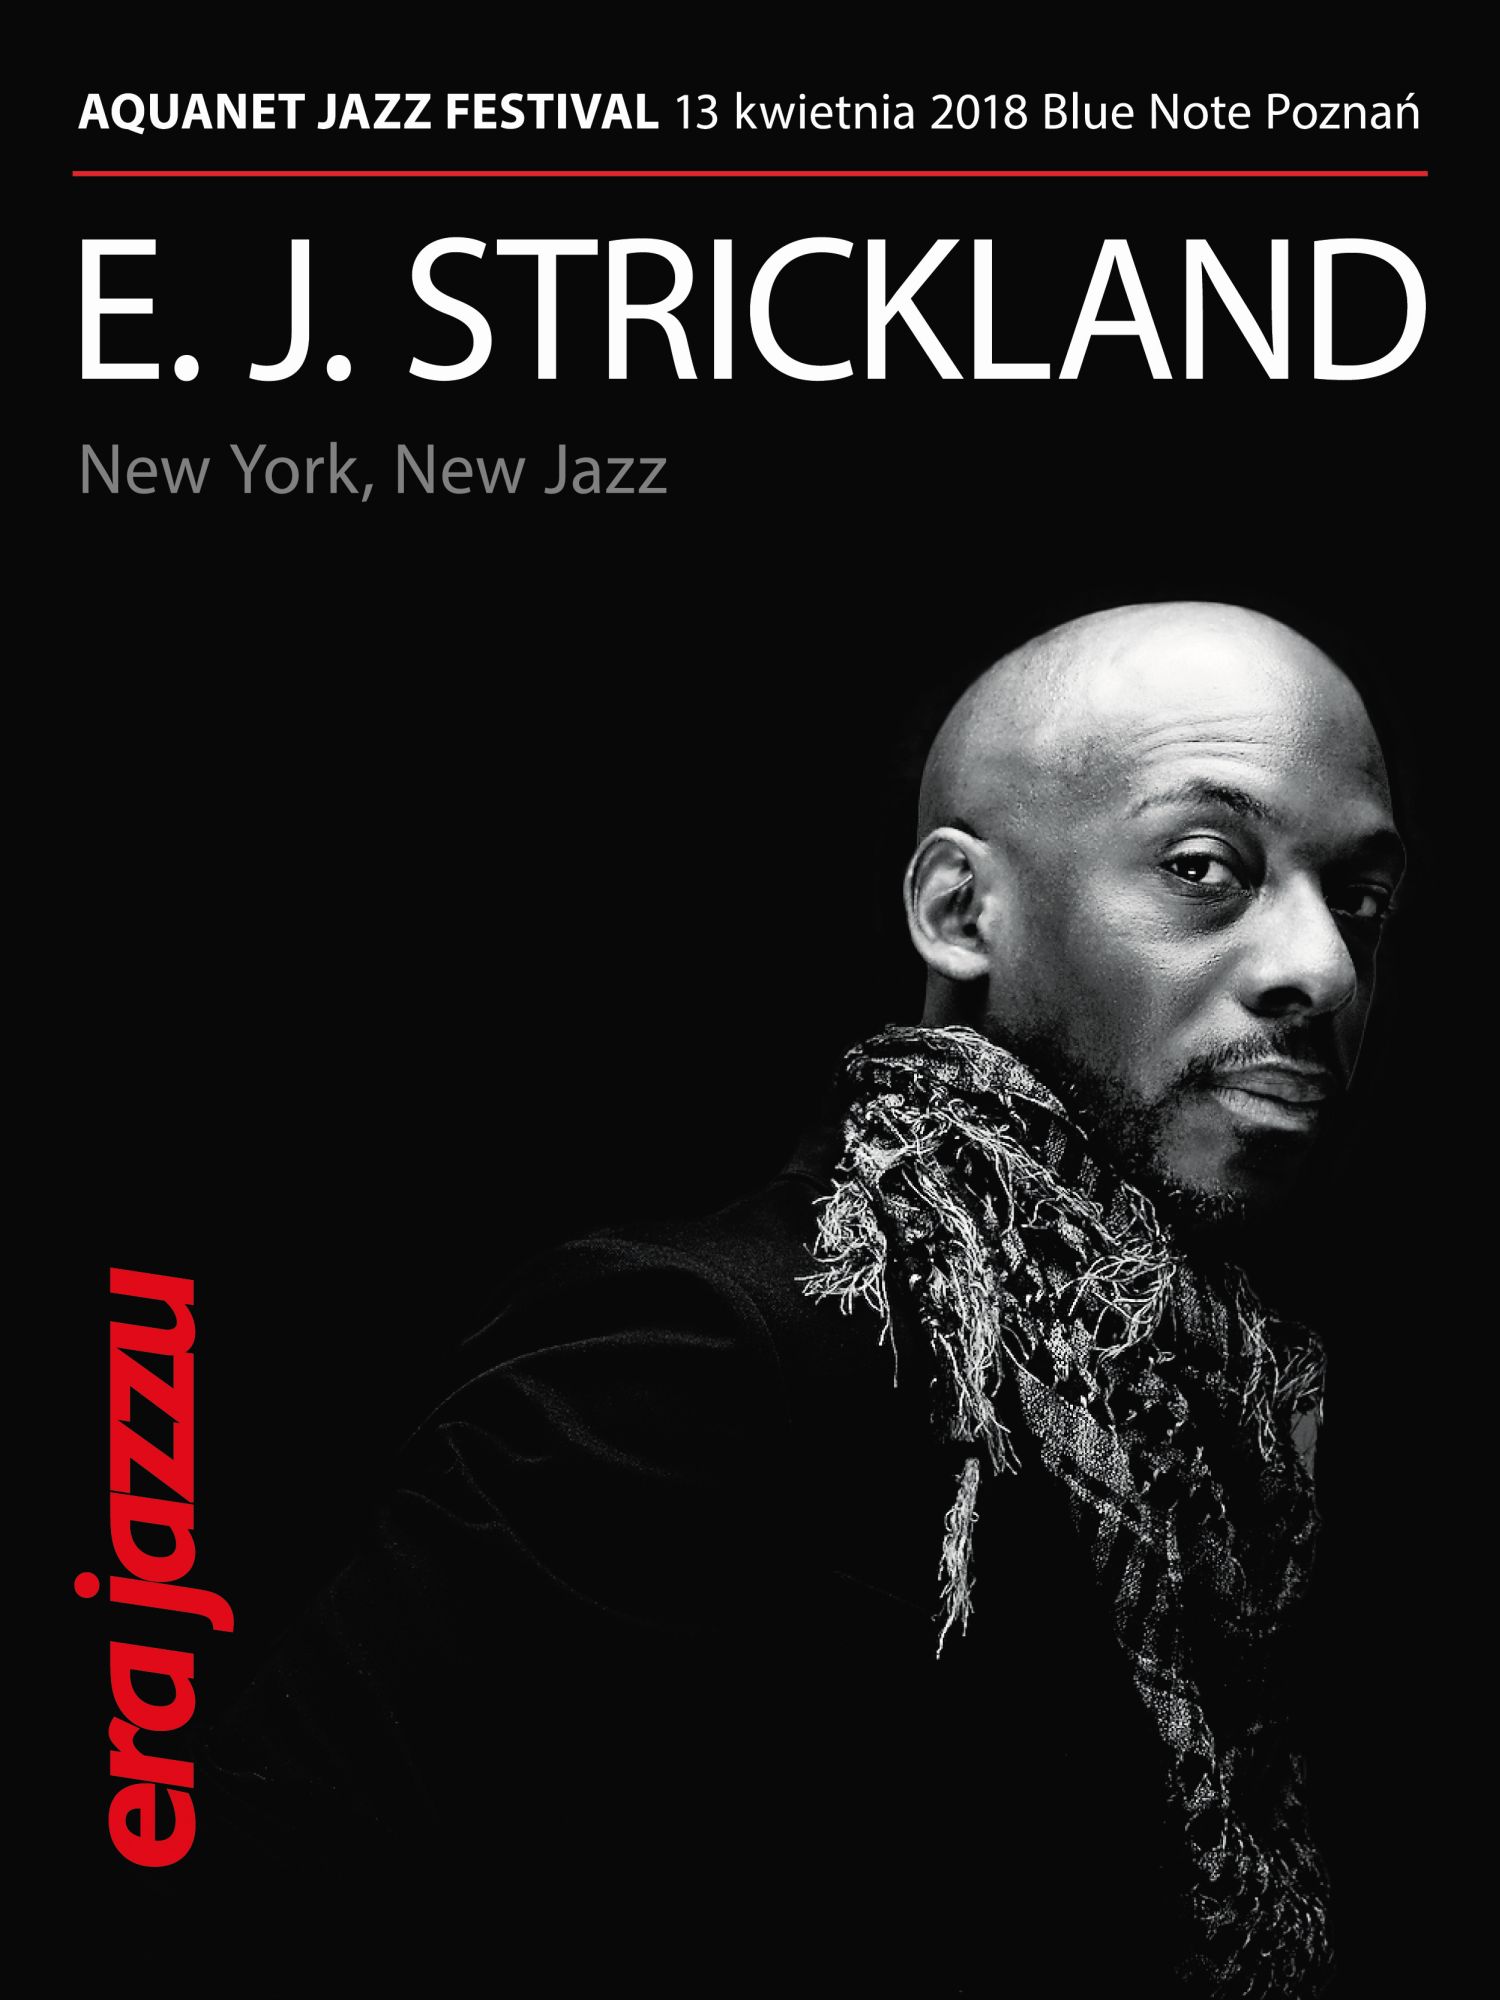 E.J. Strickland Quintet (źródło: materiały prasowe)